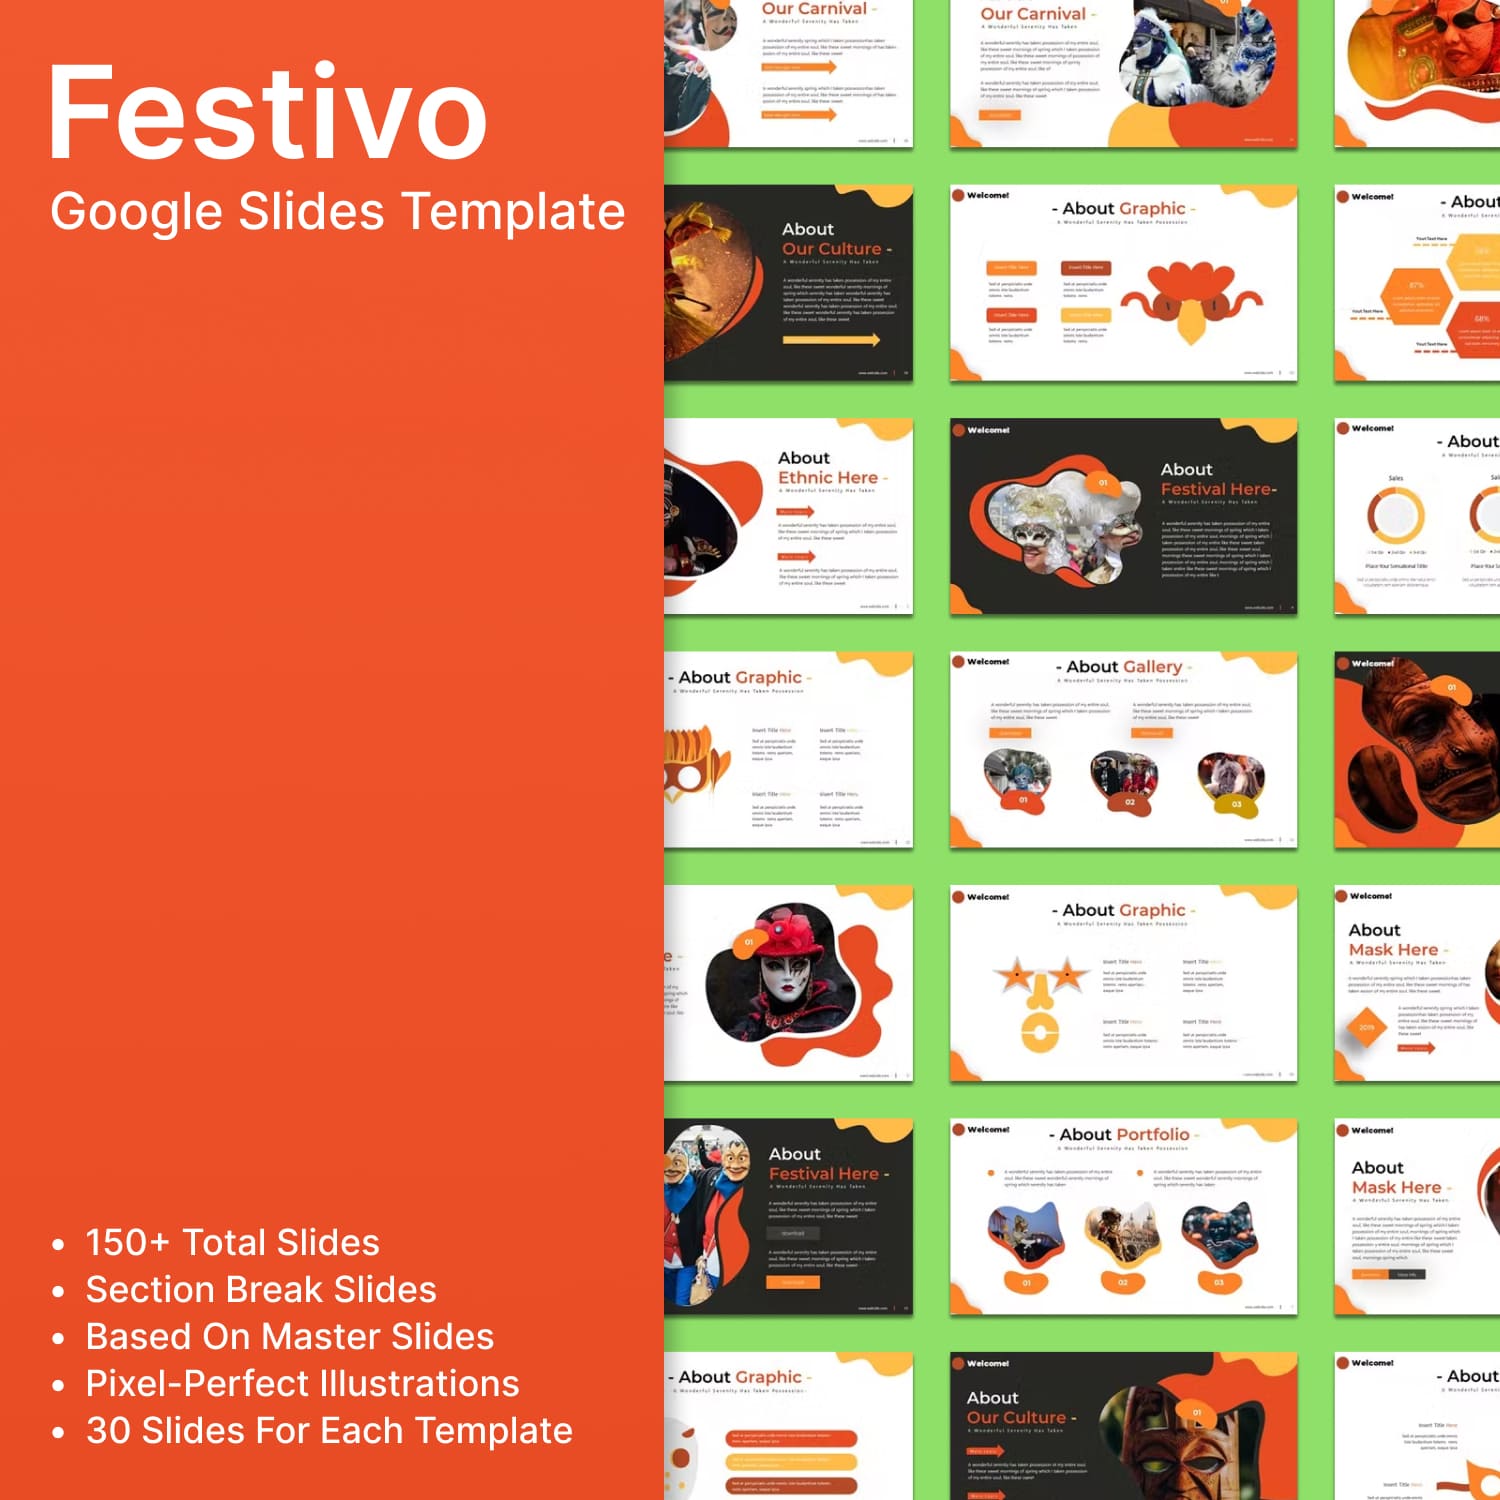 Festivo google slides template - main image preview.